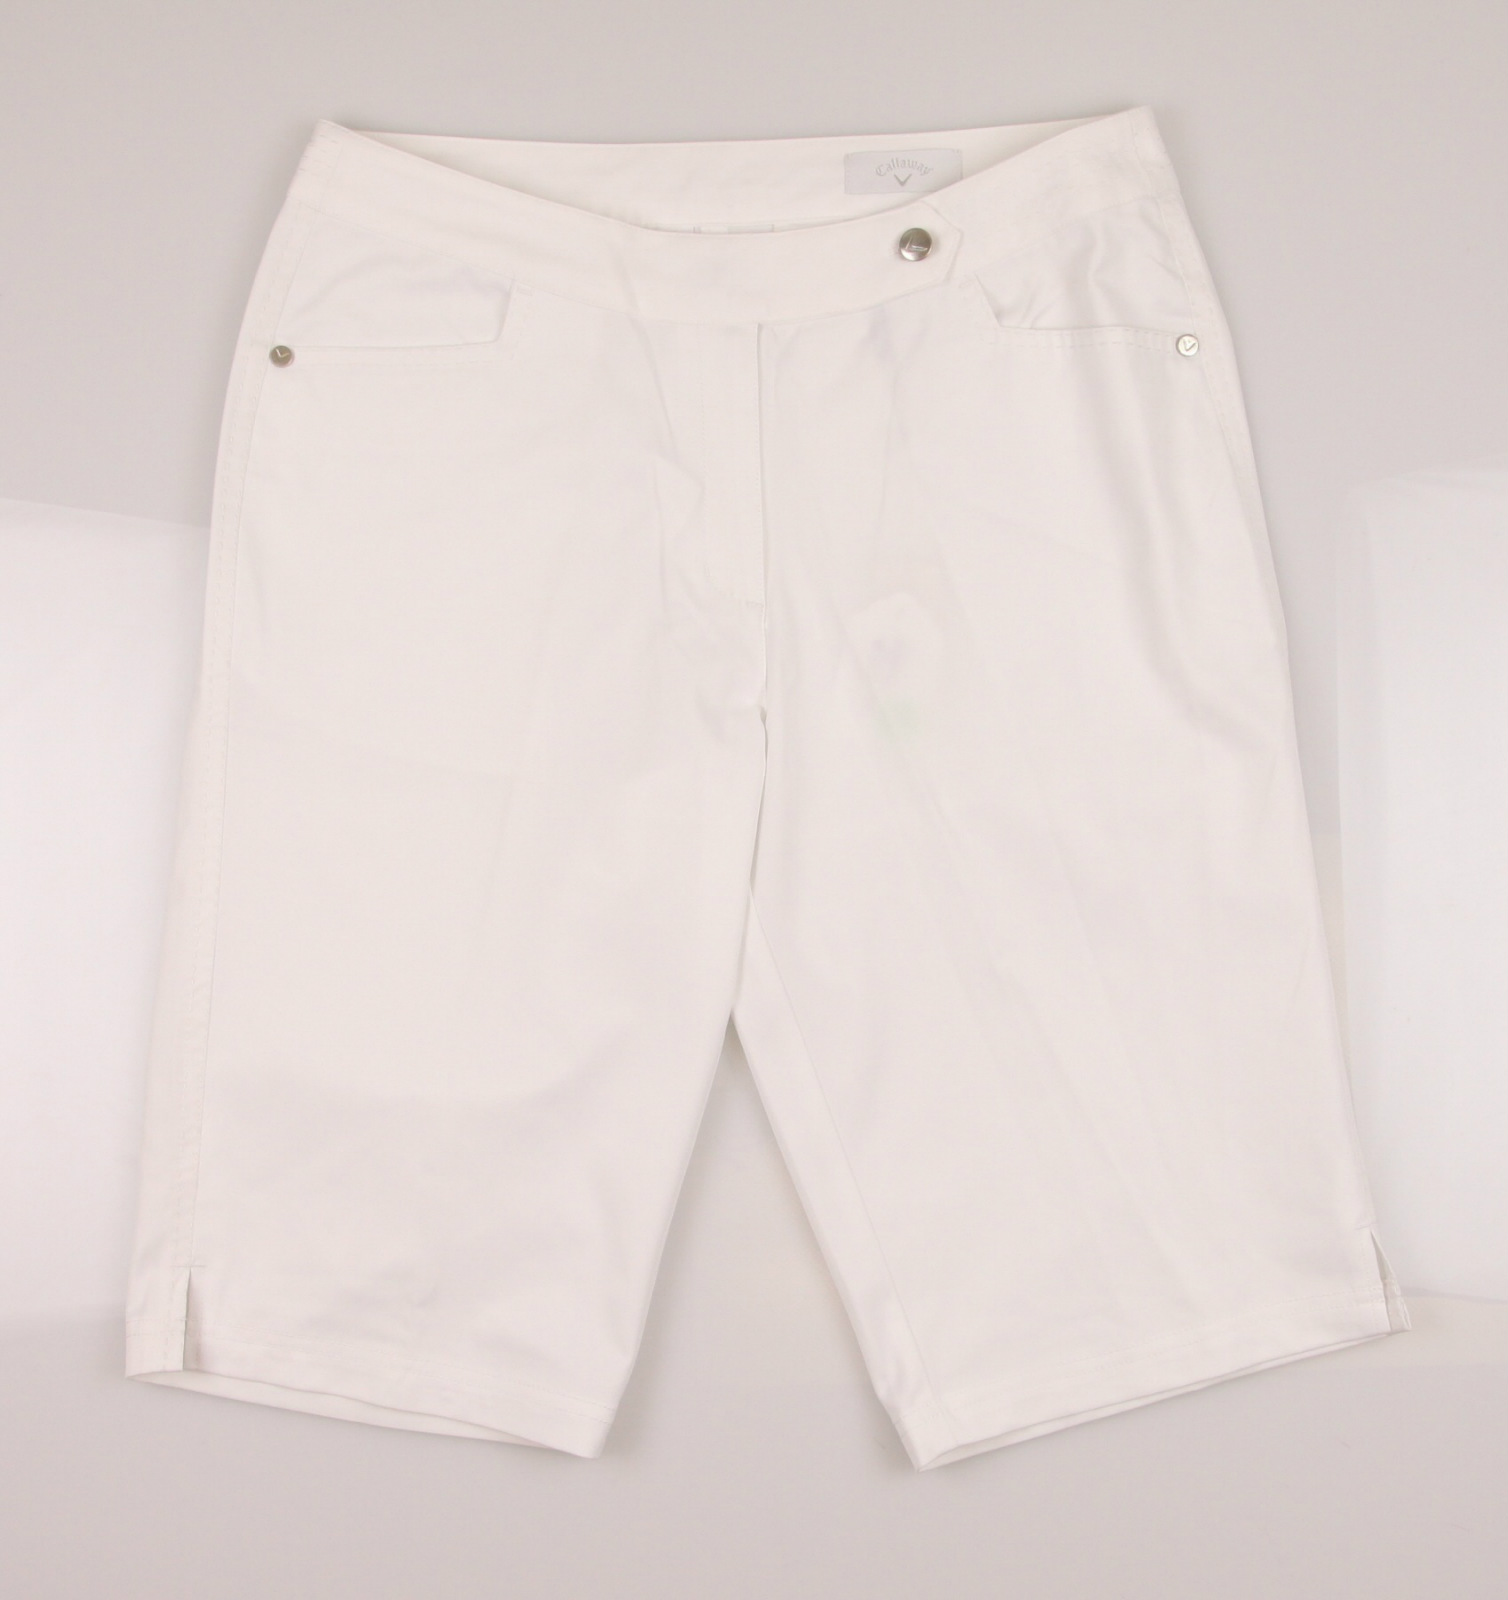 NEW Women'S Callaway Classic Golf Shorts White Size 6 | eBay